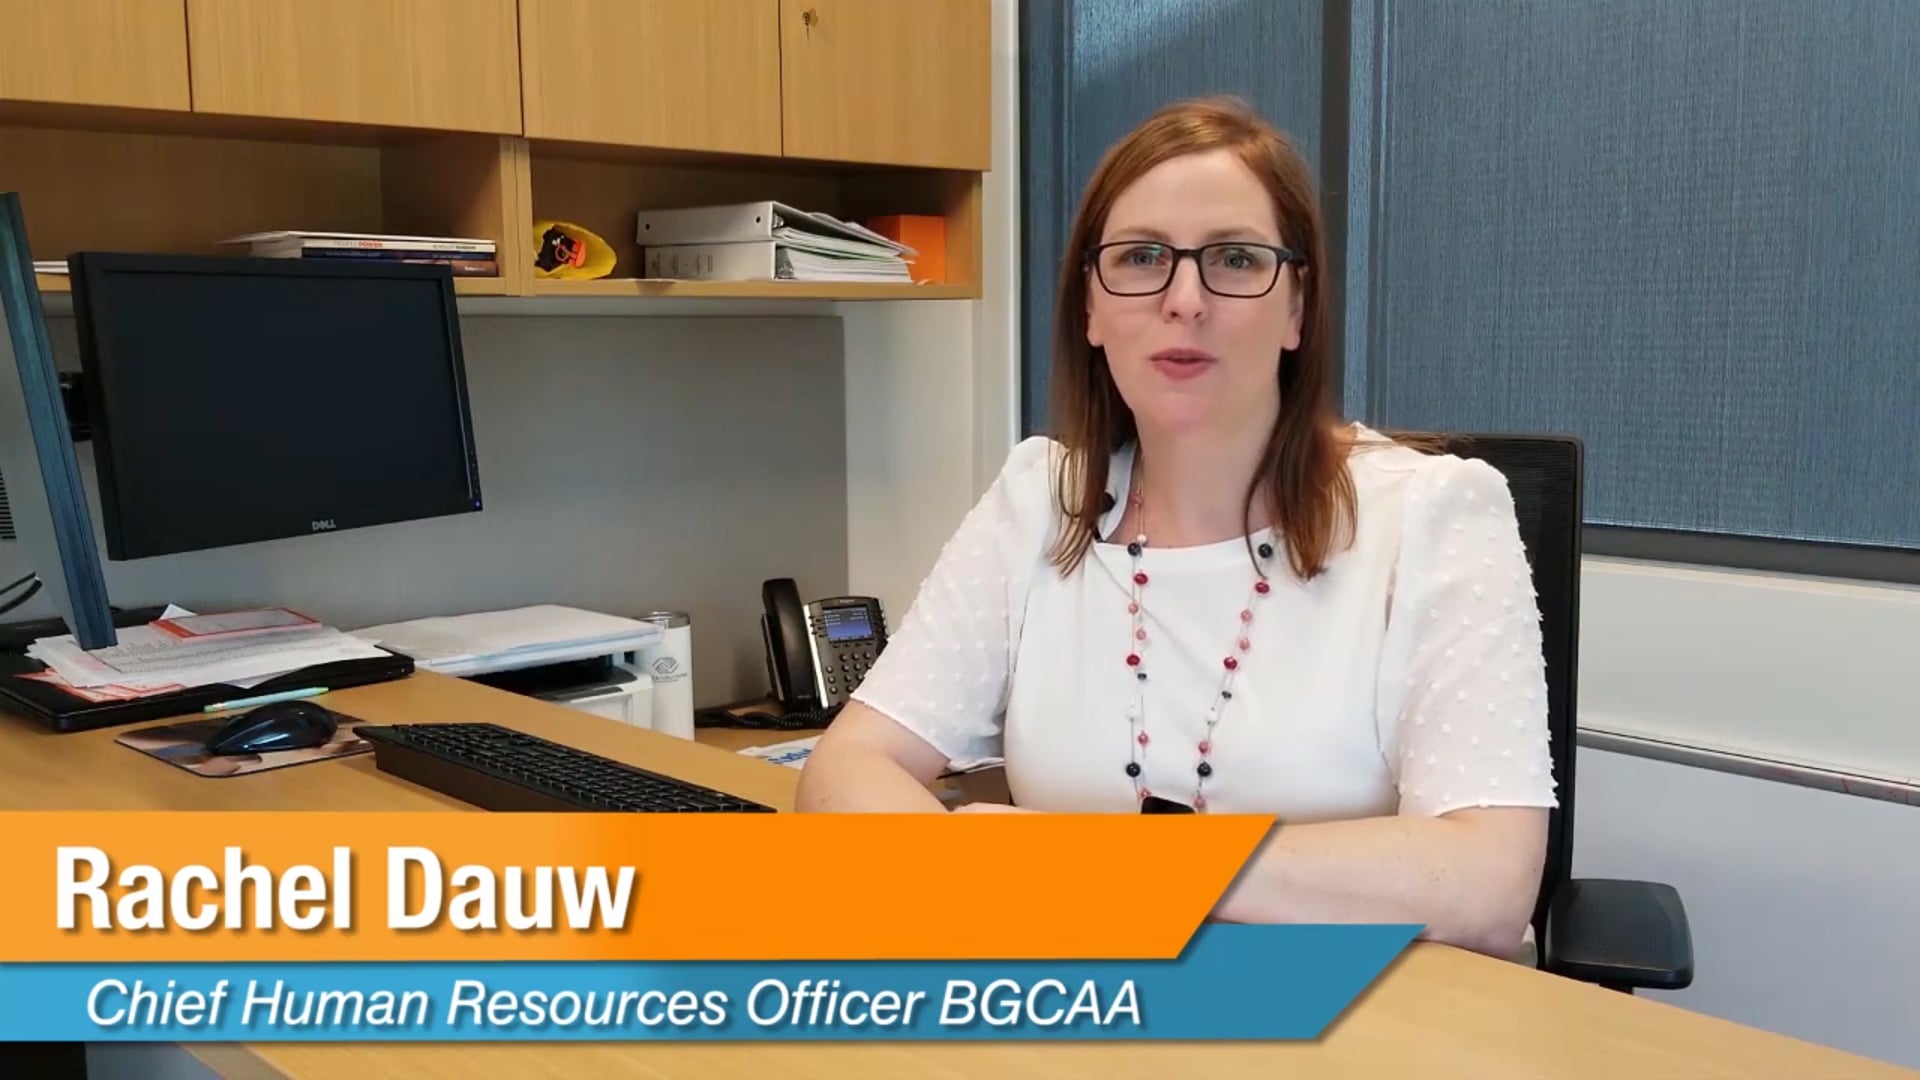 Current Job - Human Resources Manager - Rachel Dauw